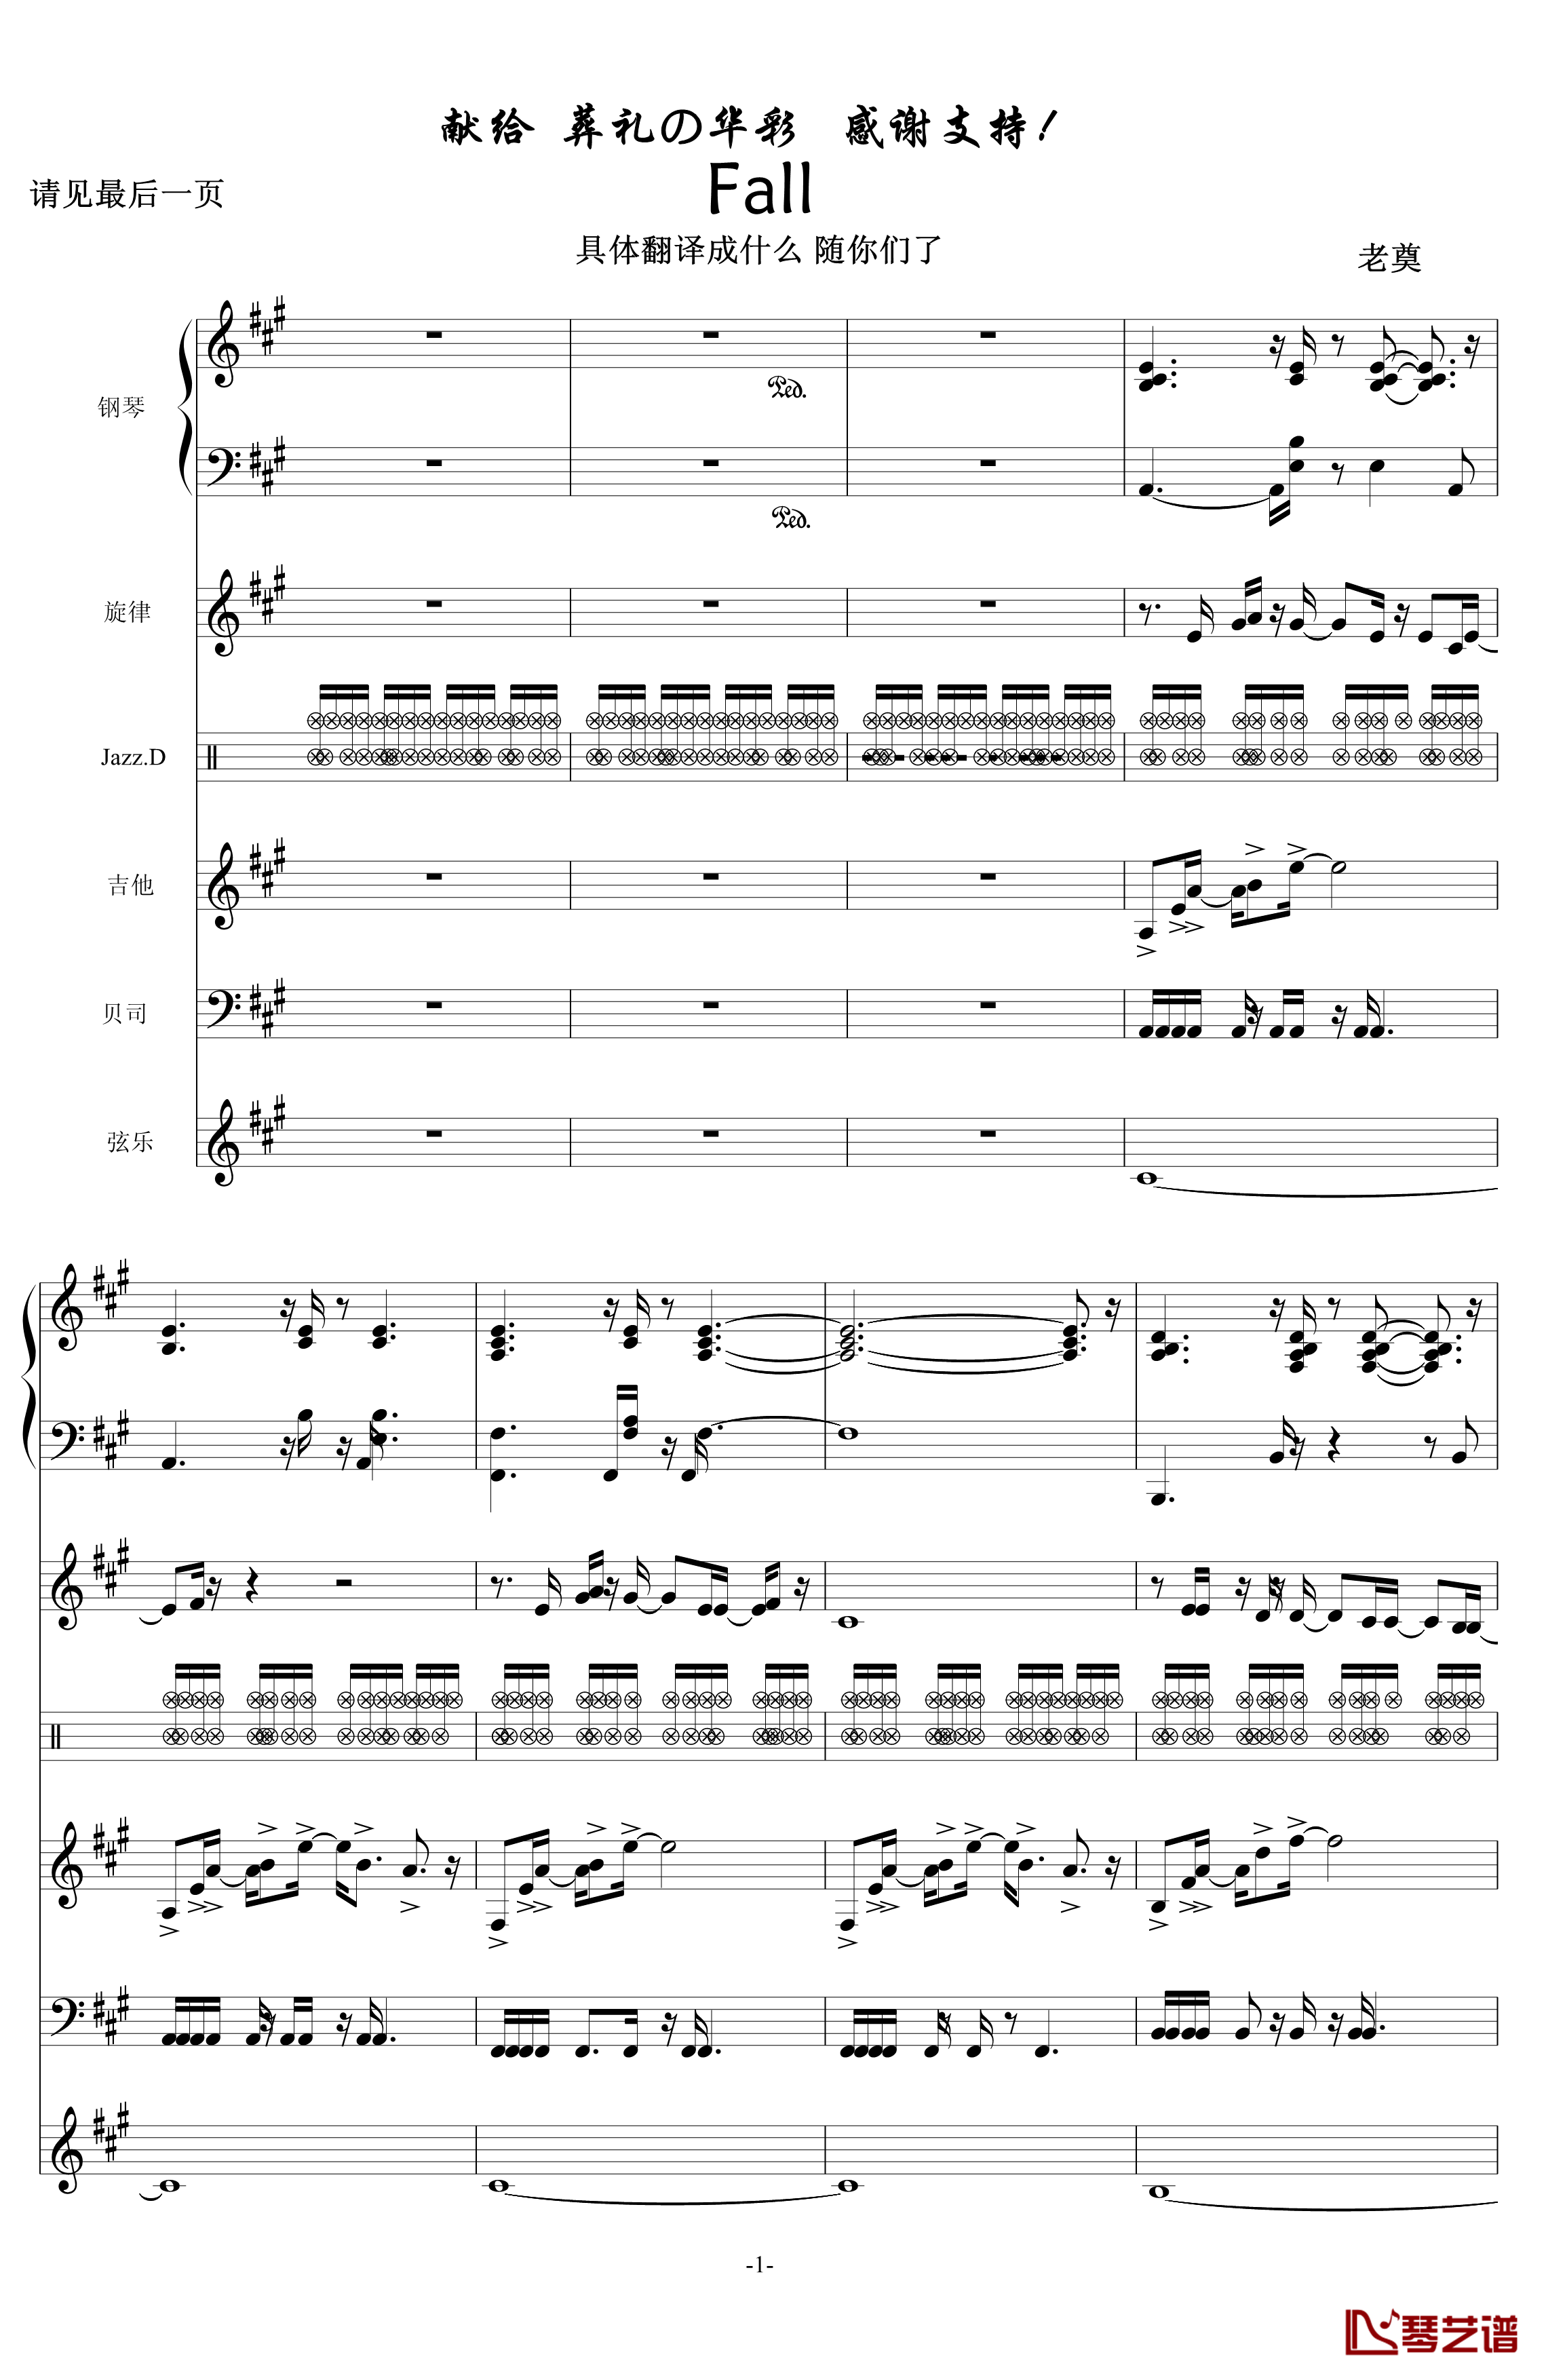 献给 葬礼の华彩钢琴谱-swenl1